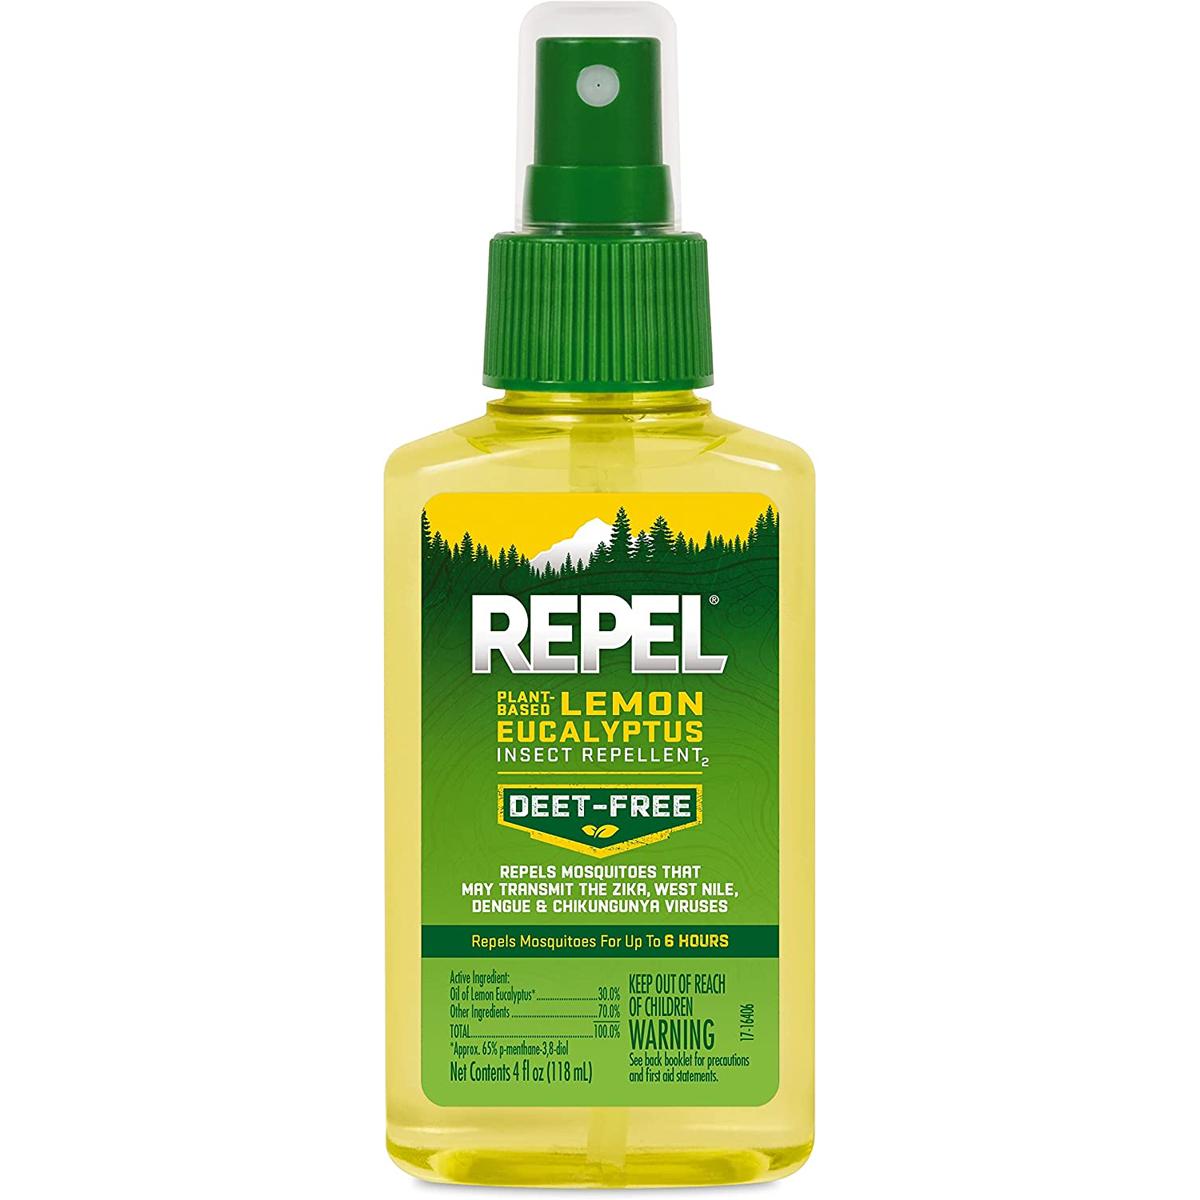 Lemon Eucalyptus Natural Mosquito Repellent Spray for $3.49 Shipped